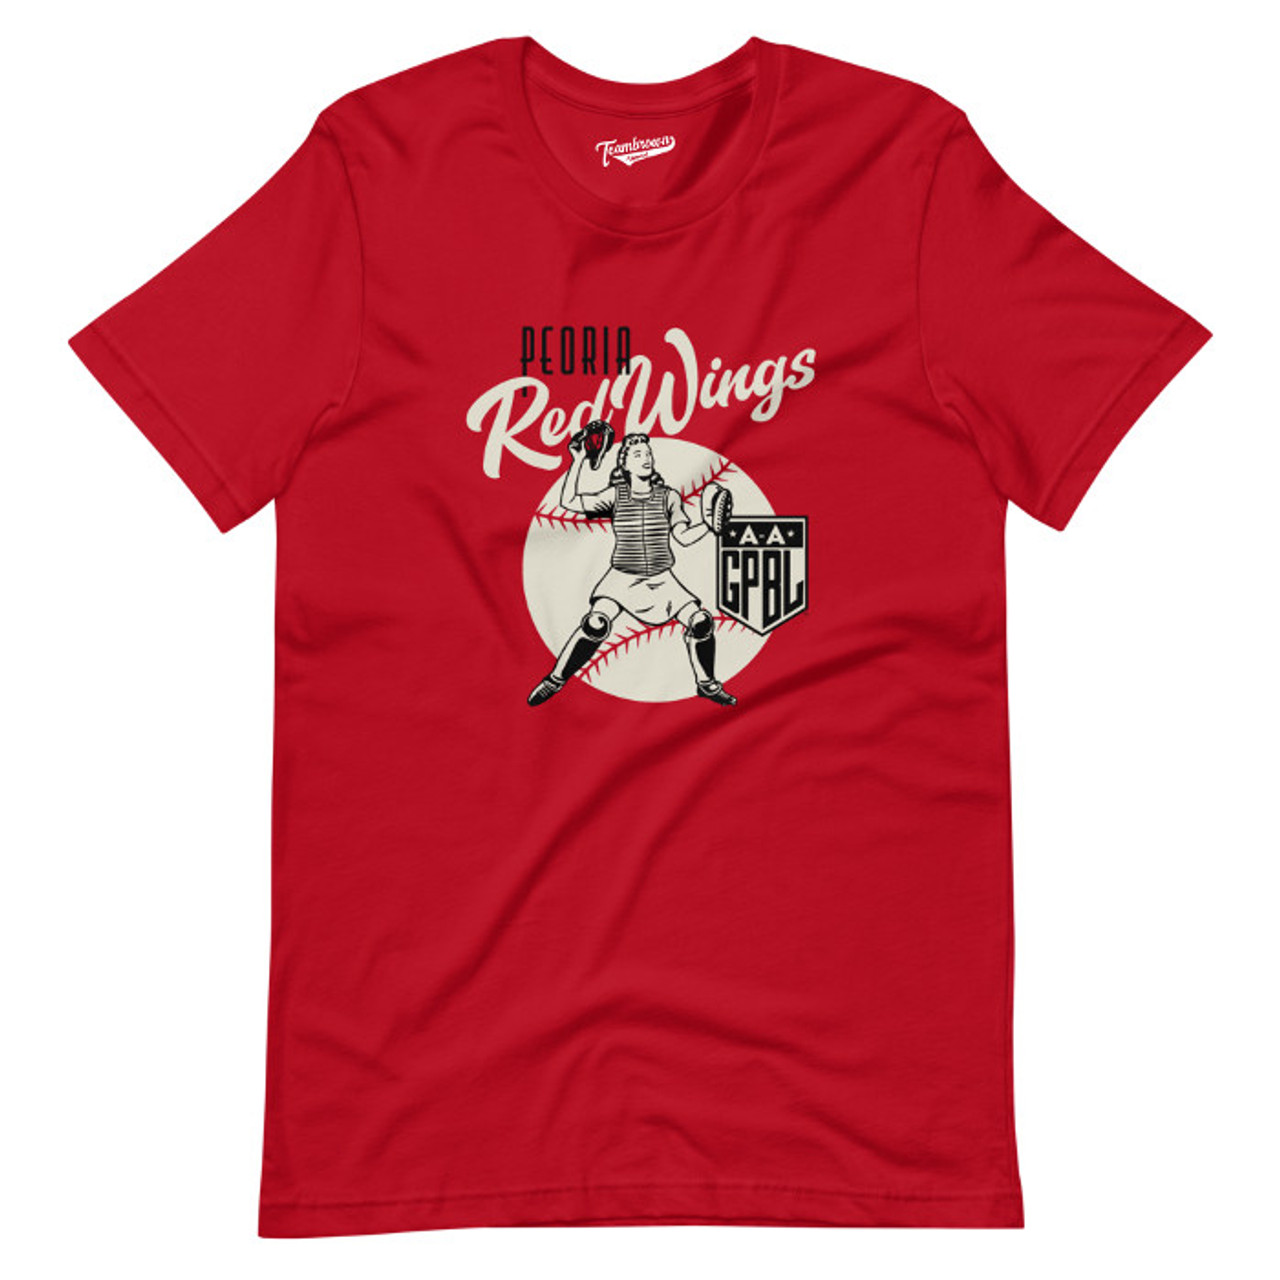 Rochester Red Wings Womens Long Sleeve Baseball Tee 